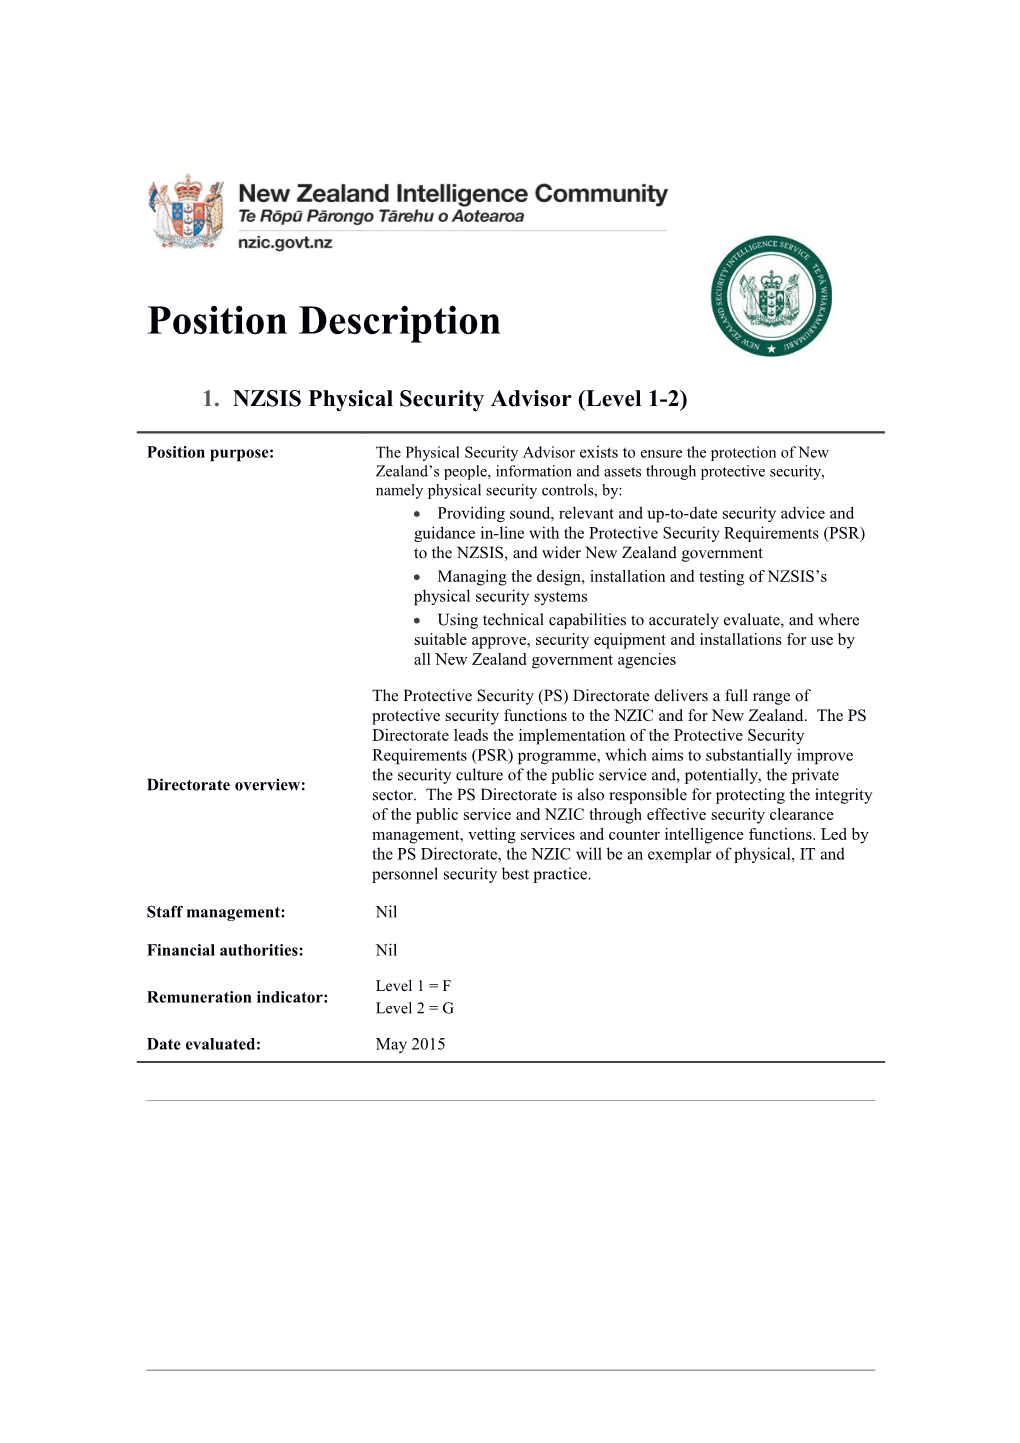 NZSIS Physical Security Advisor (Level 1-2)